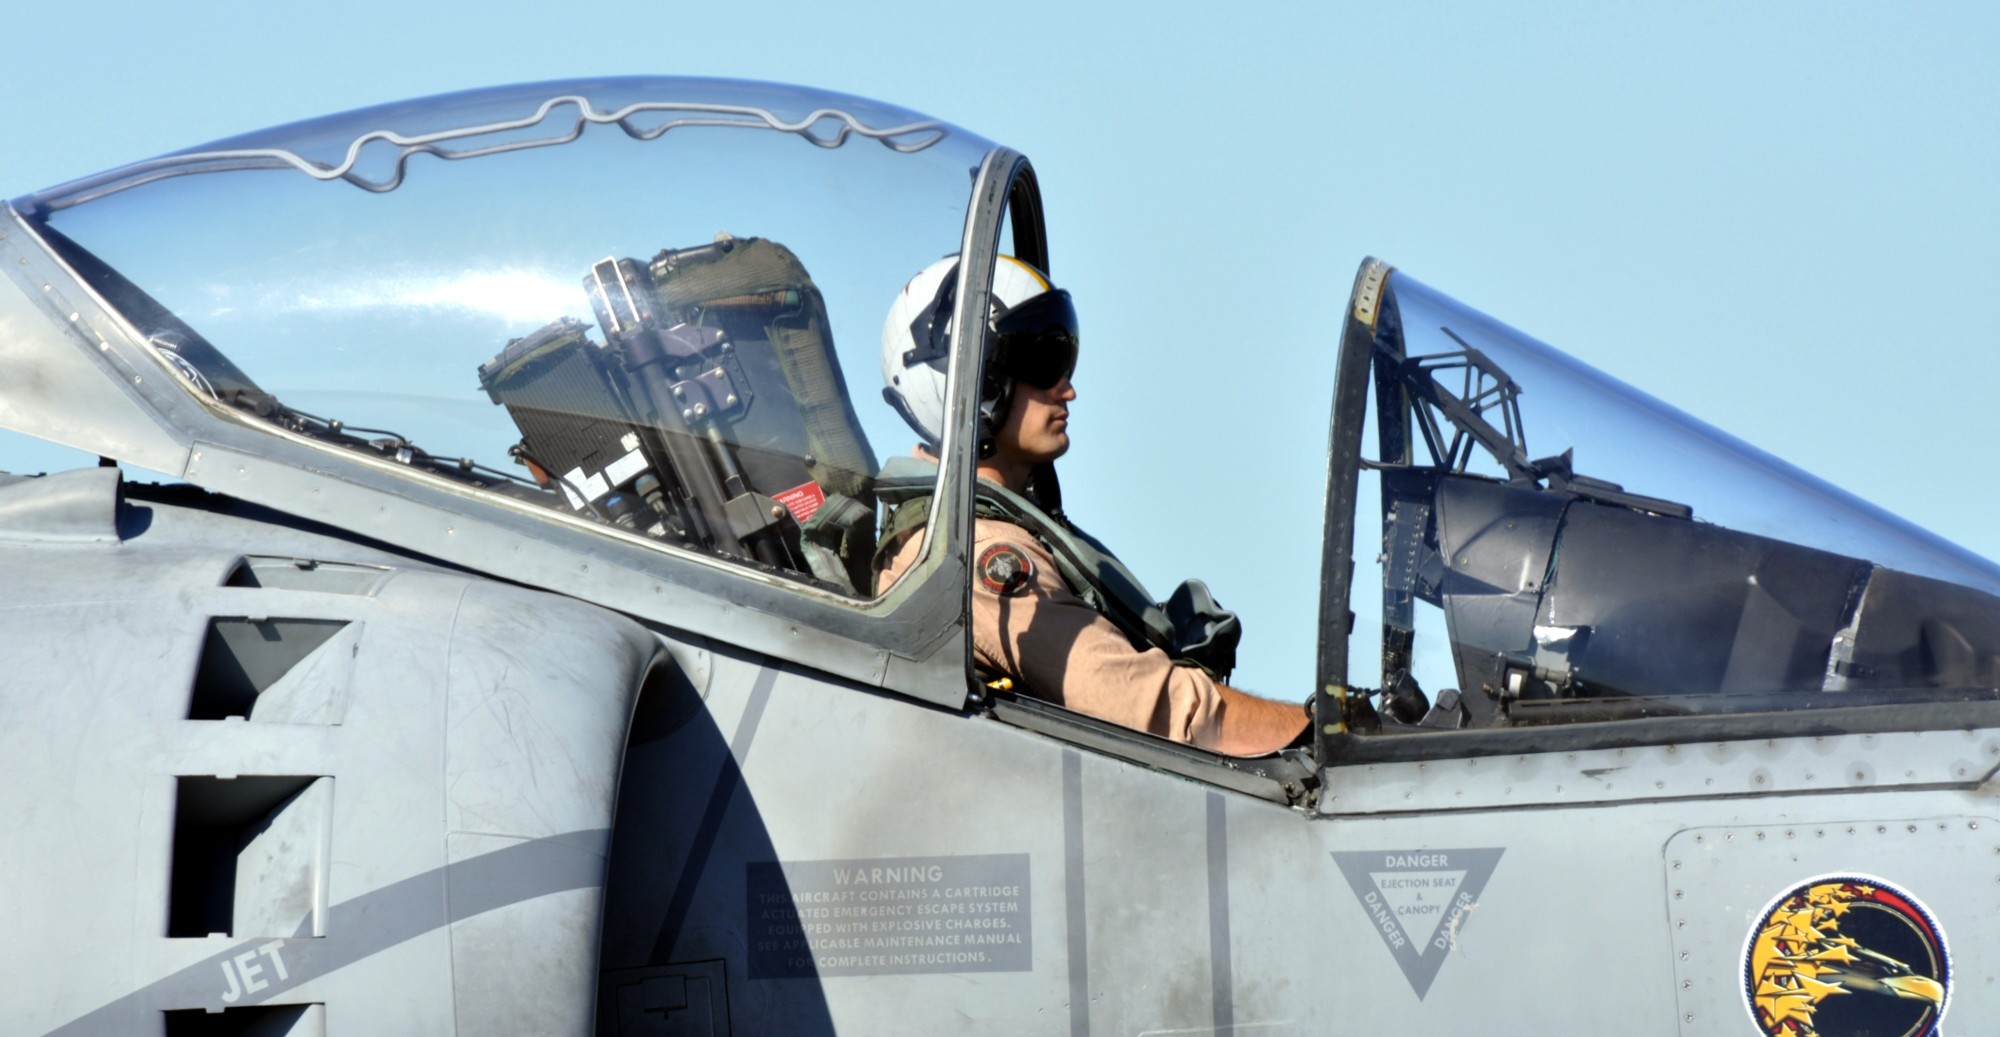 vmat-203 hawks av-8b harrier training replacement squadron usmc